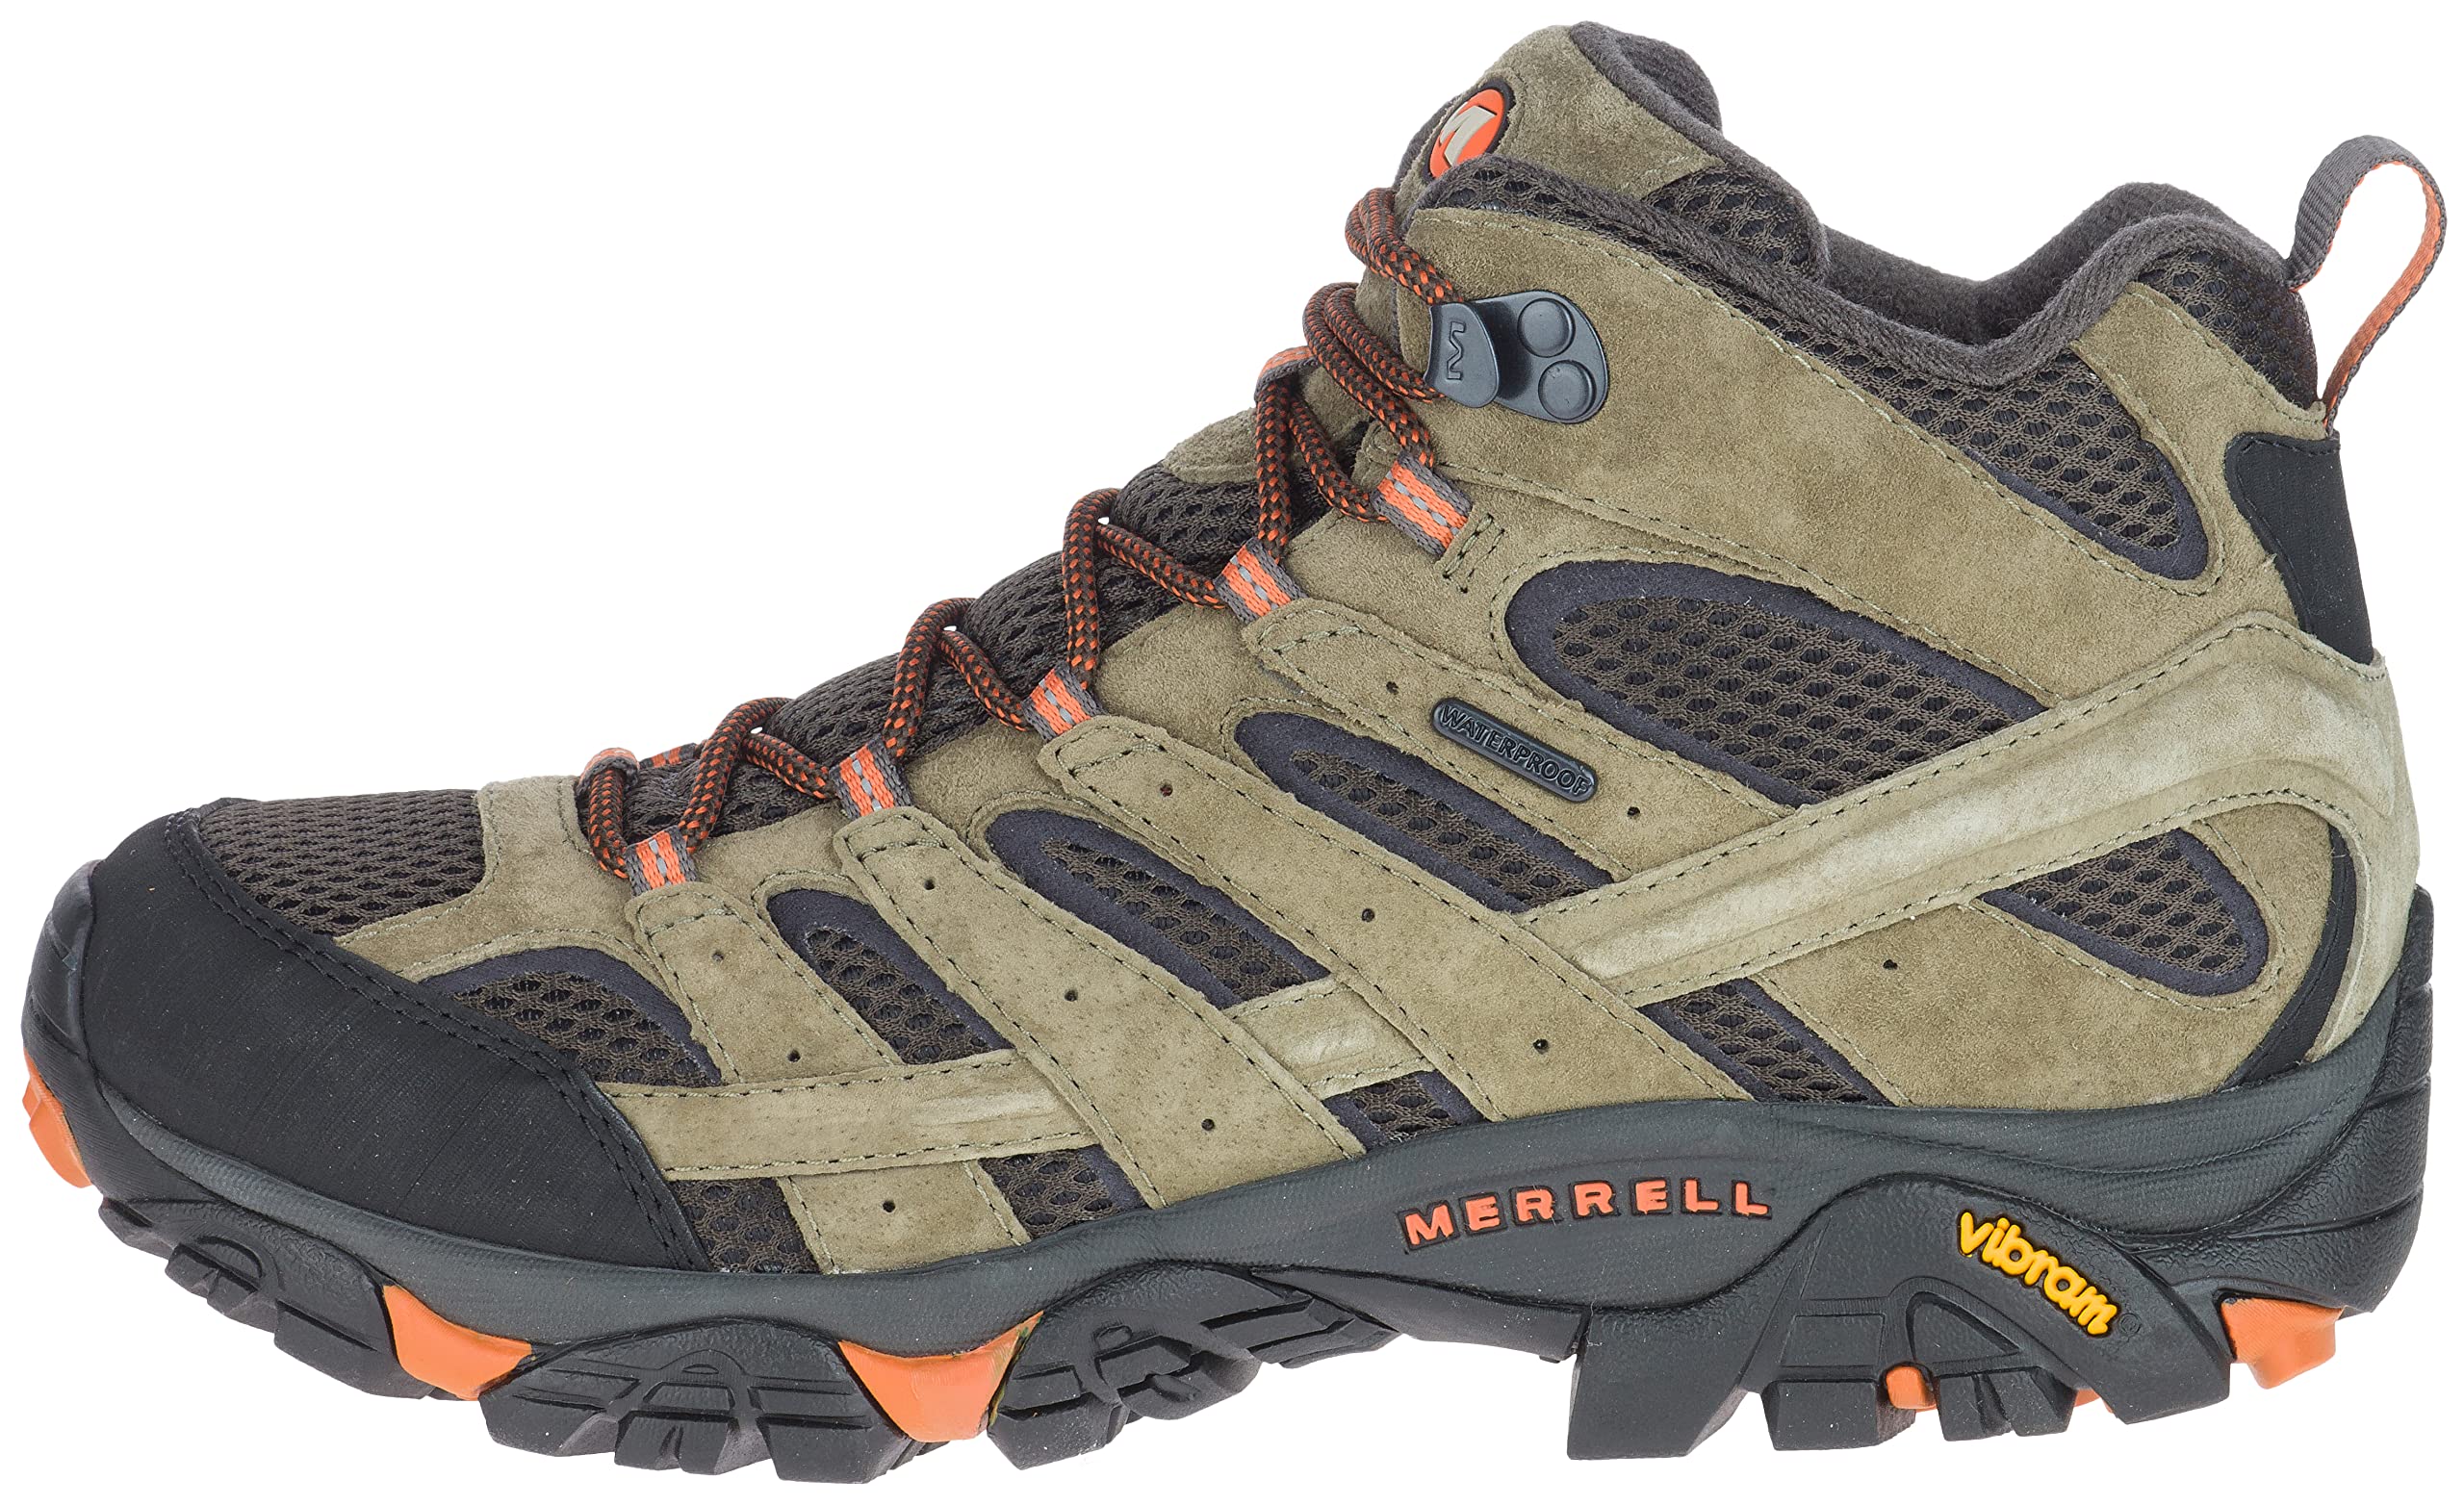 Merrell Men's Moab 2 Mid Waterproof Hiking Boot